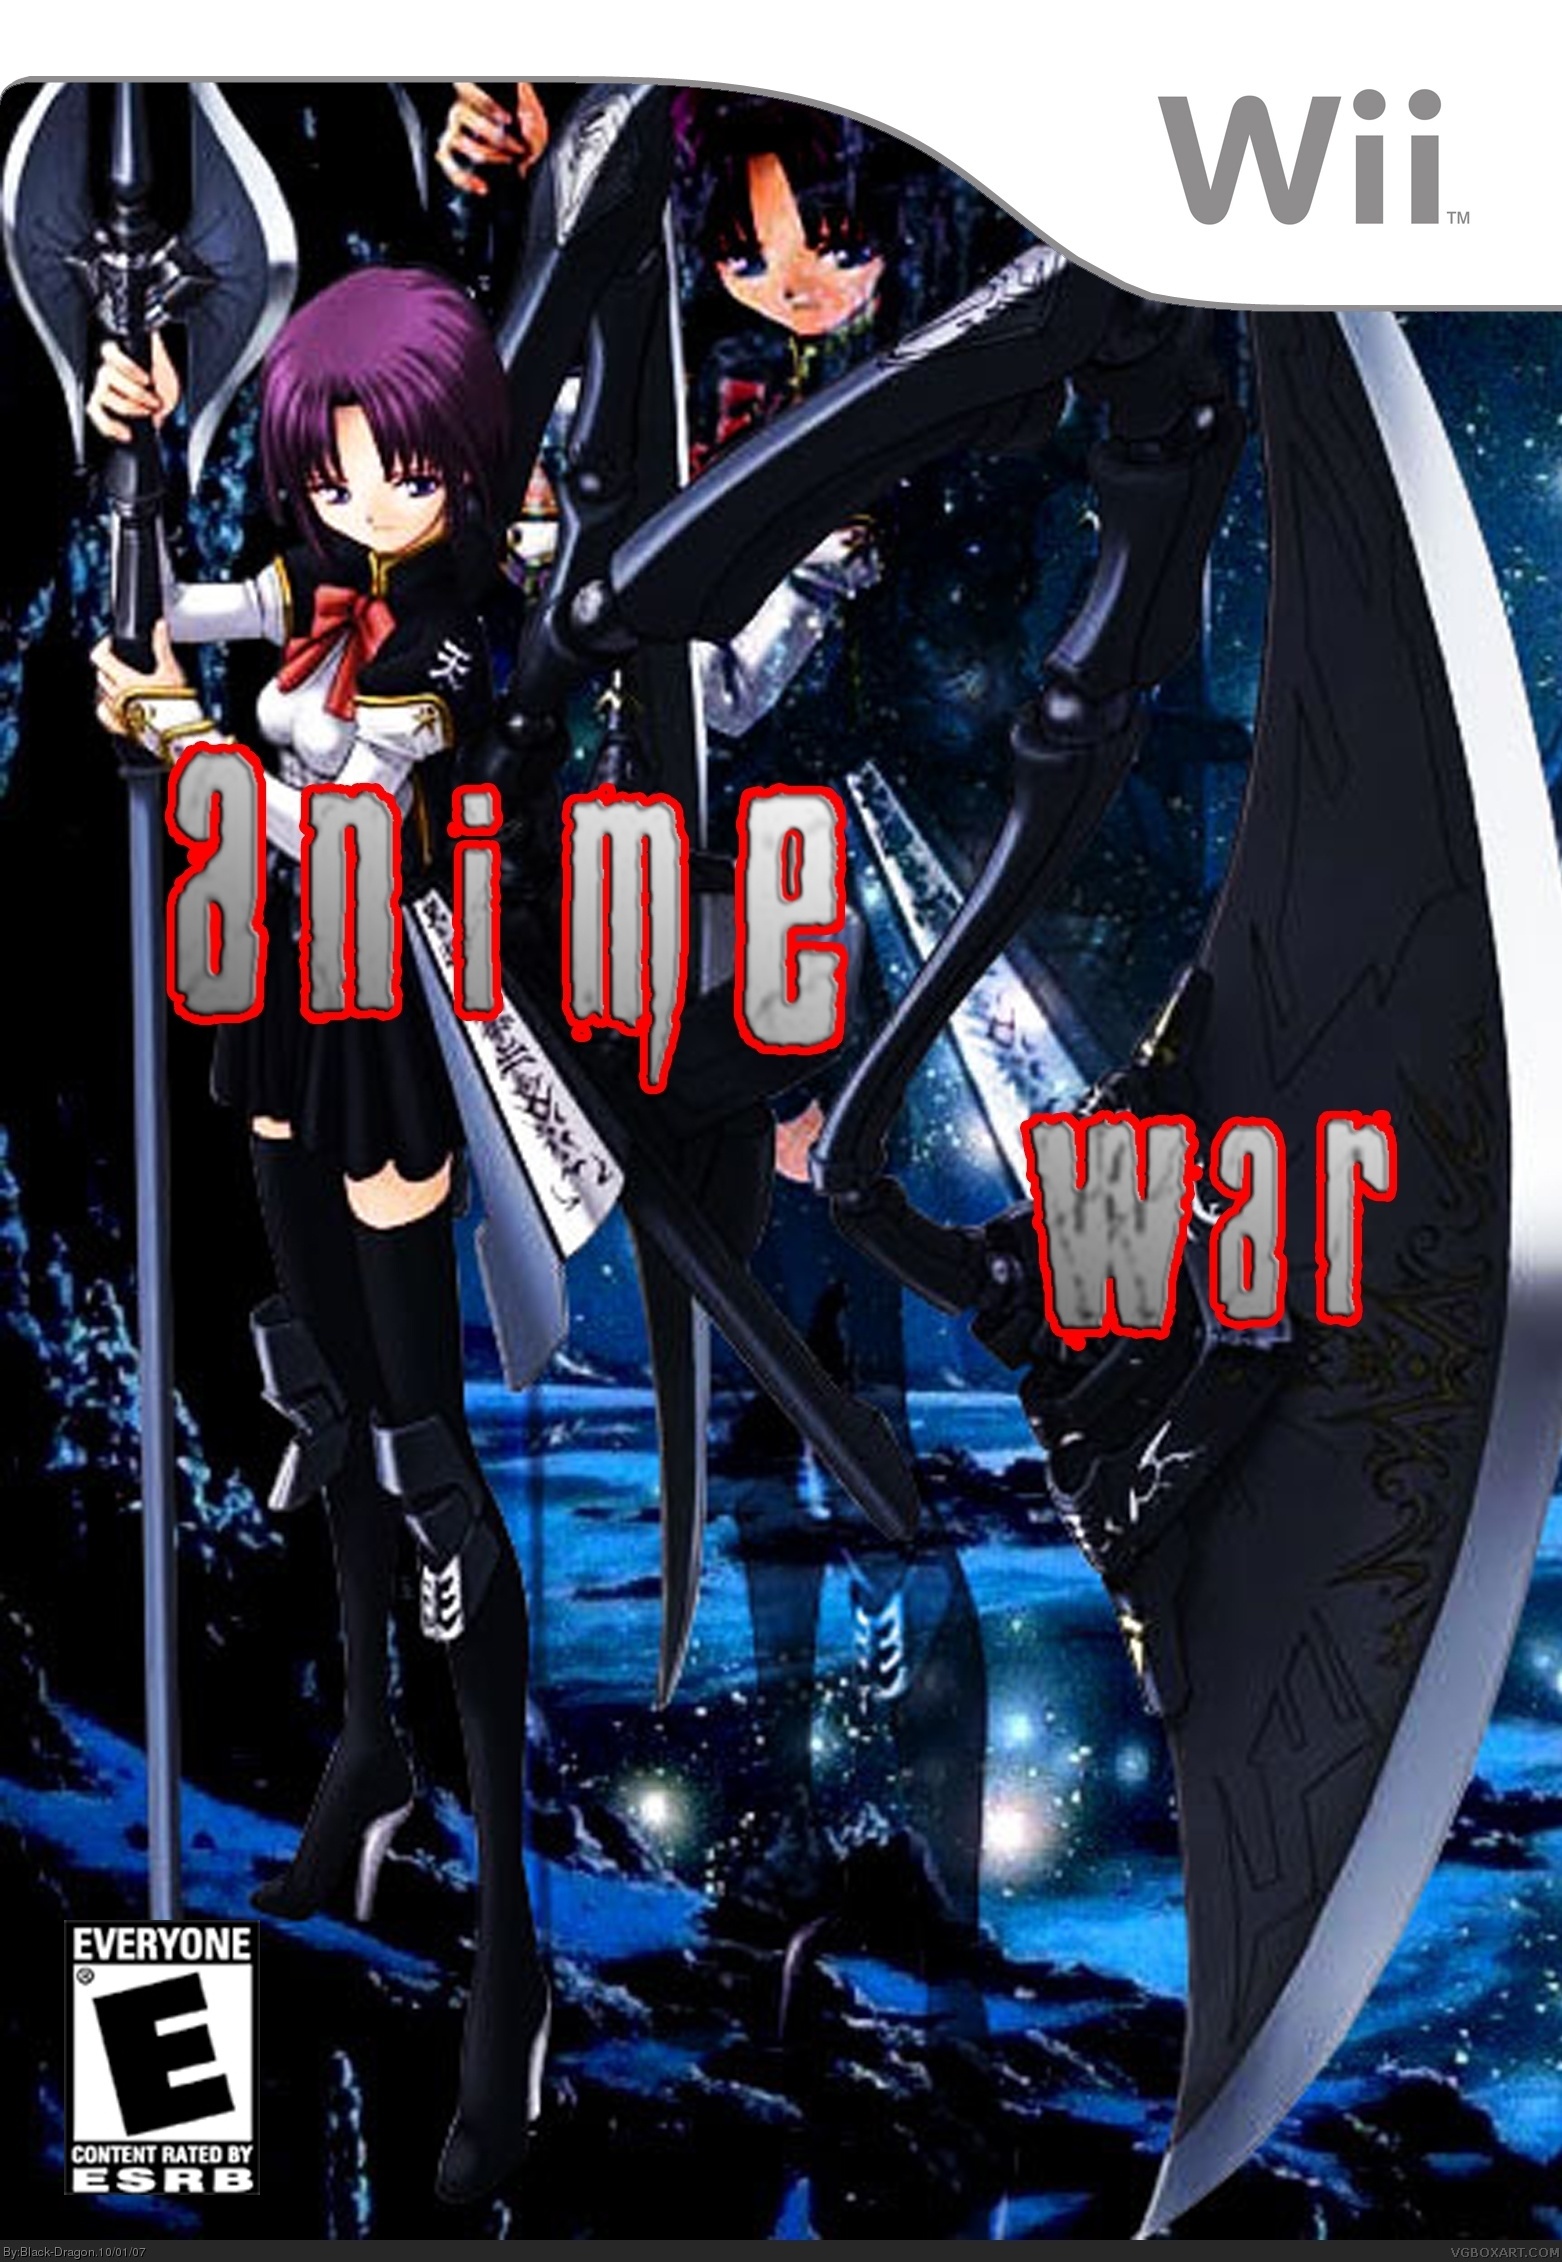 Anime War box cover